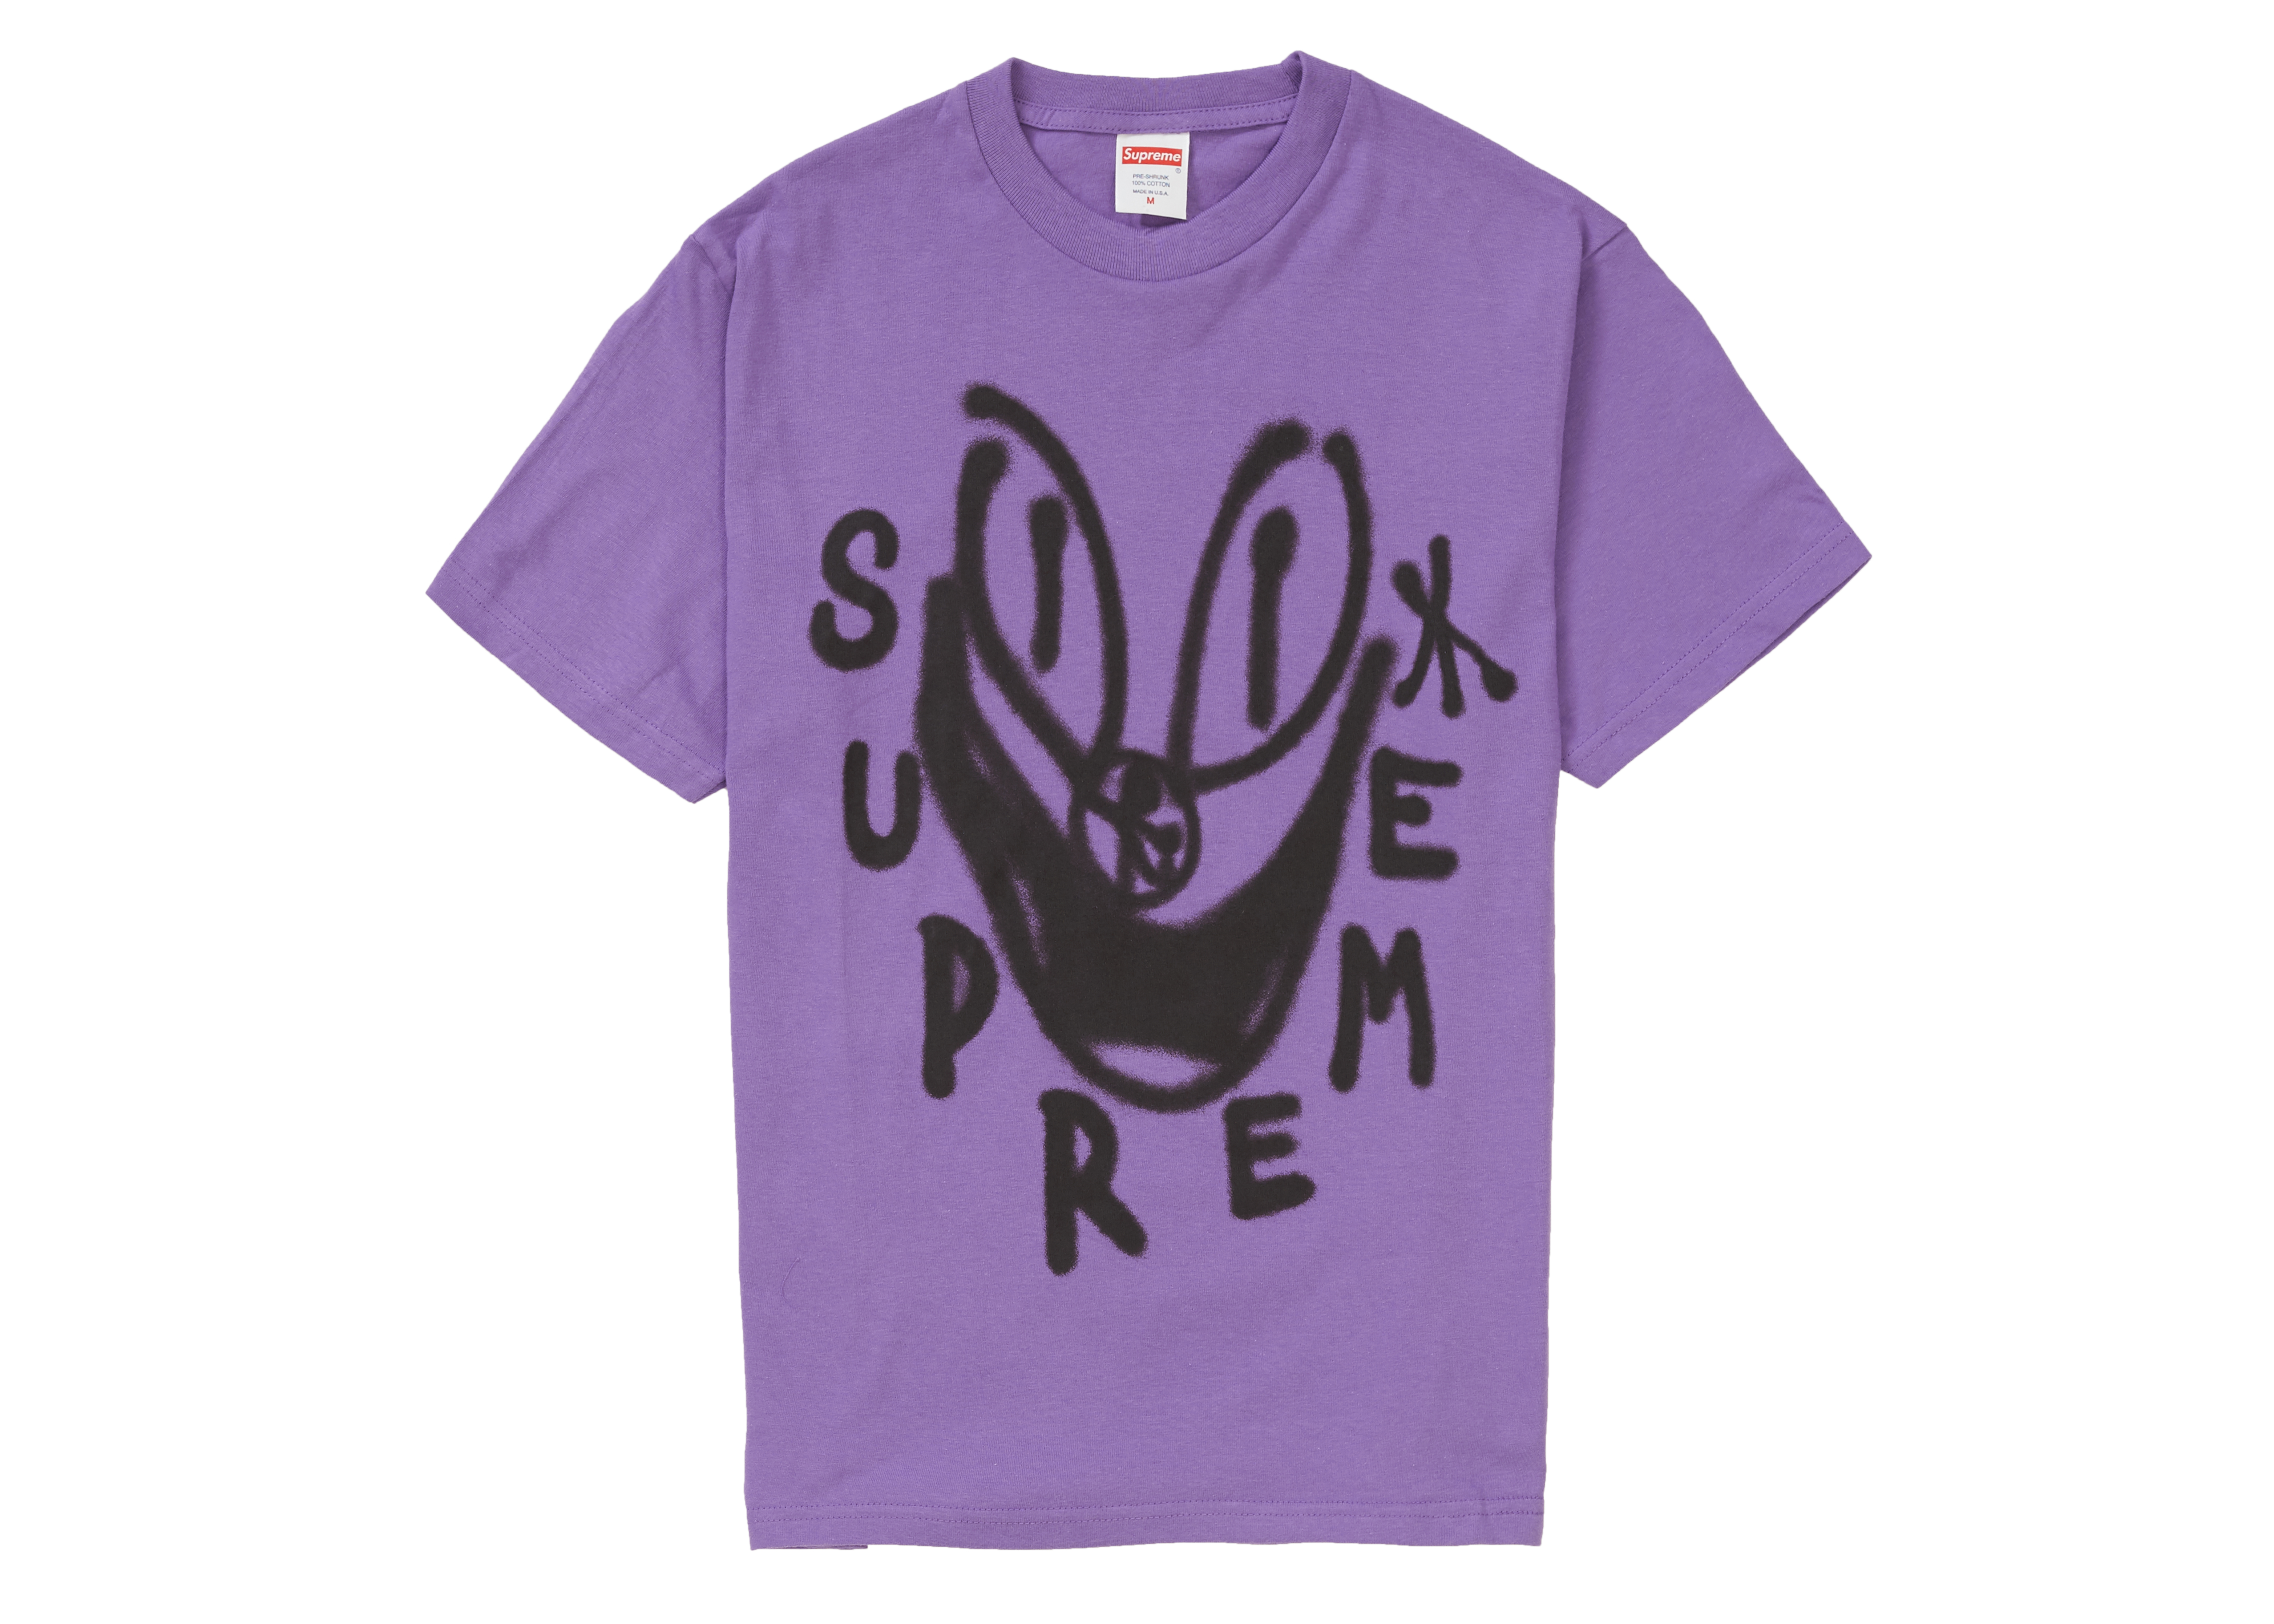 Tシャツ/カットソー(半袖/袖なし)Supreme Smile Tee